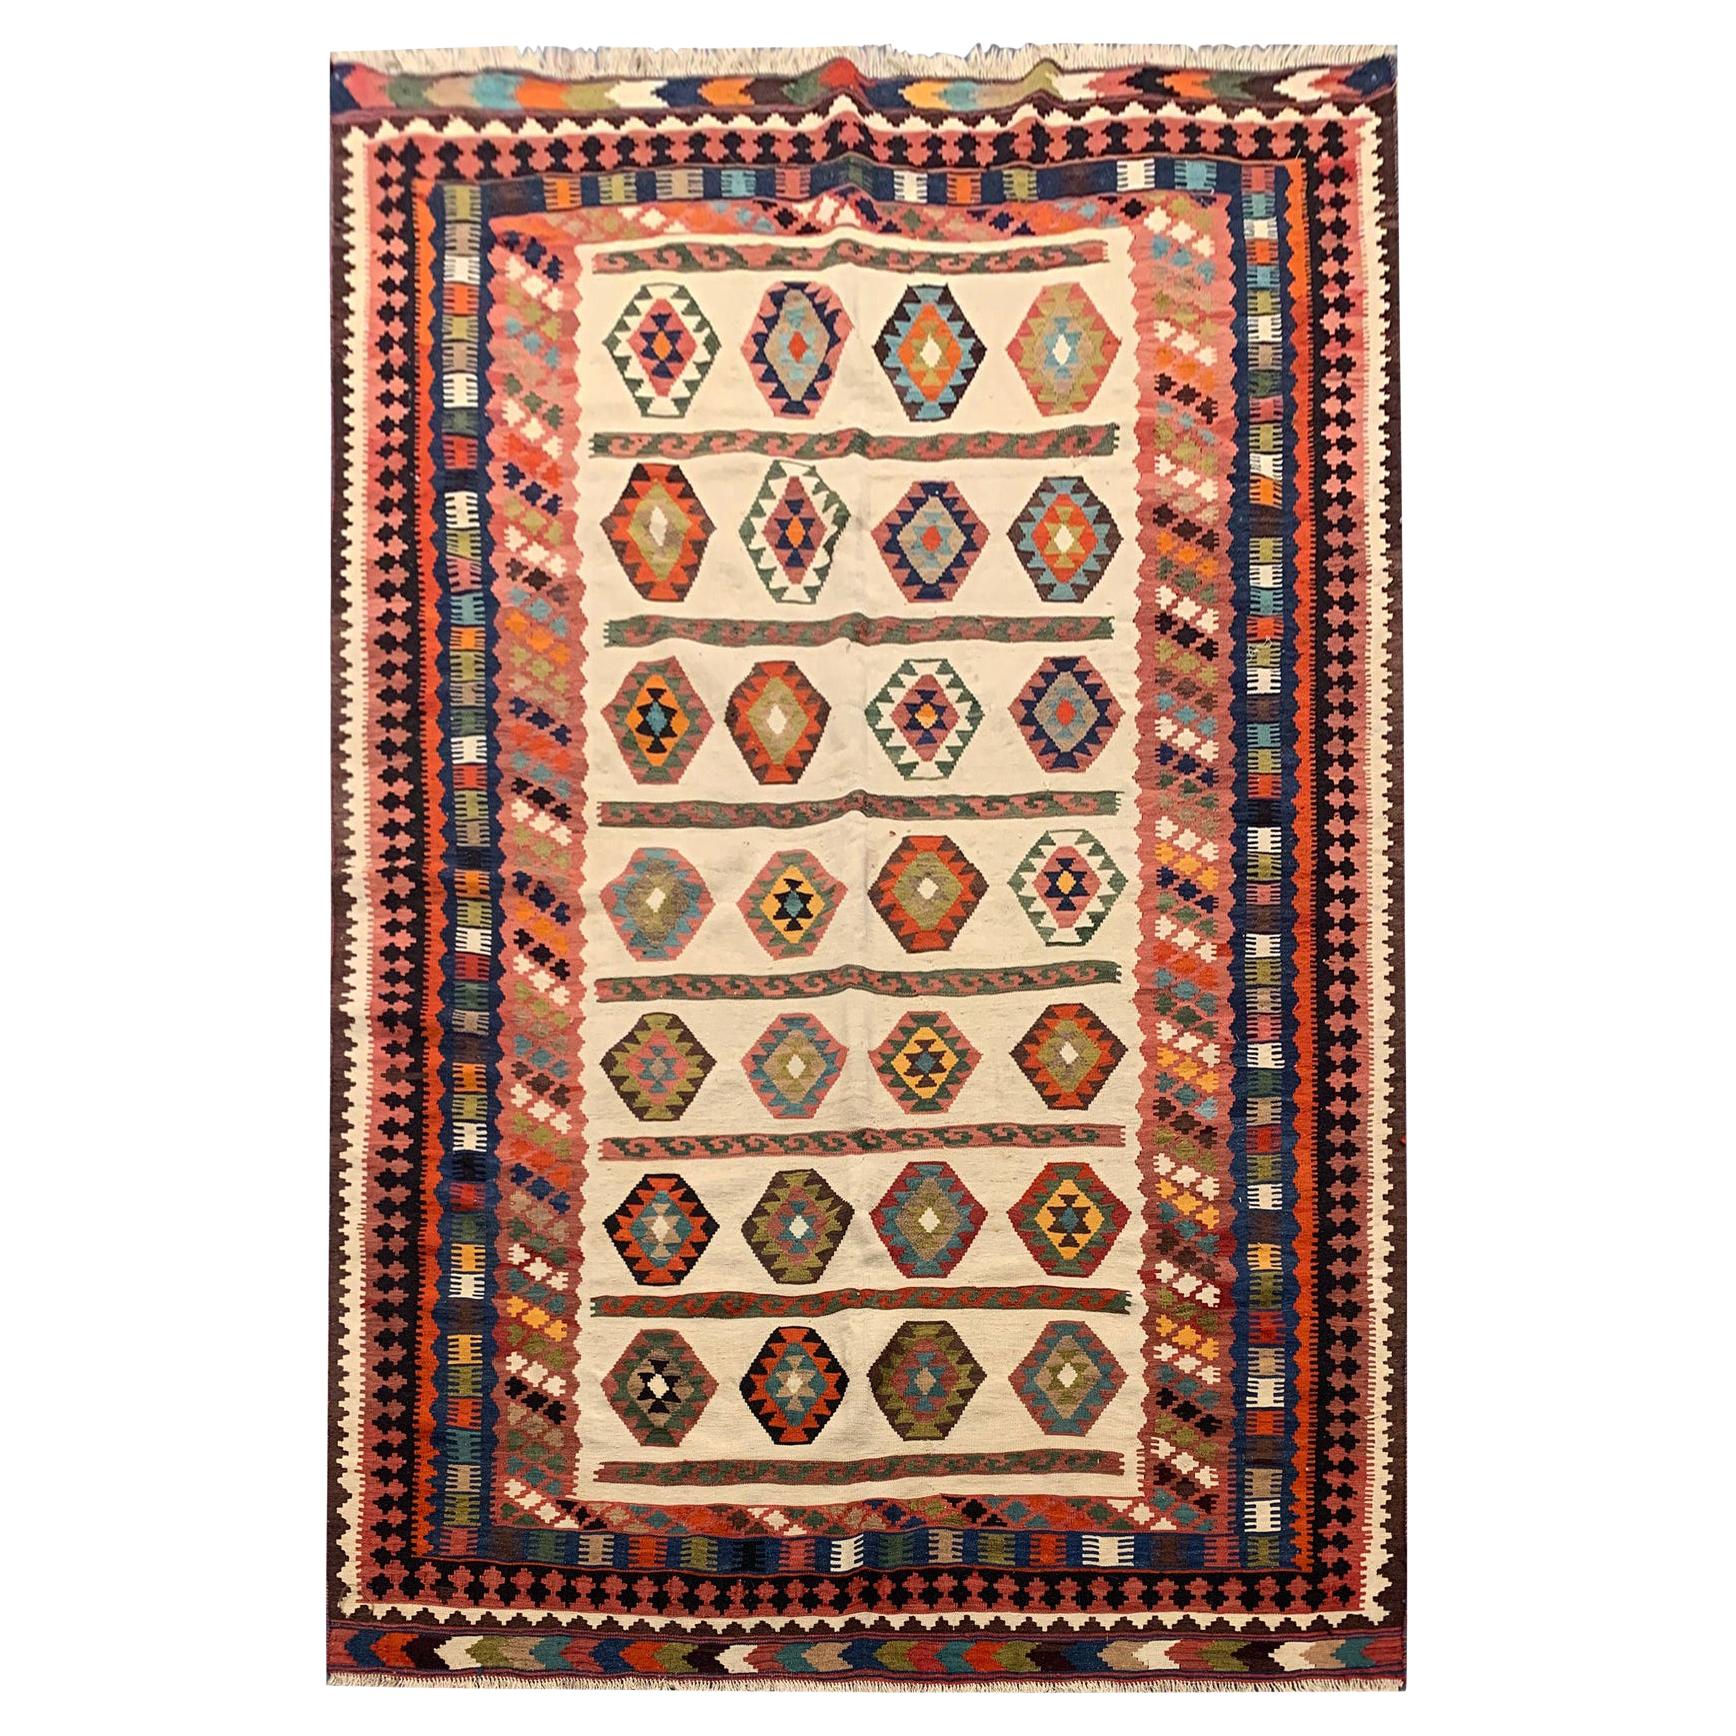 Handmade Kilims Antique Kilim Rug Geometric Wool Carpet